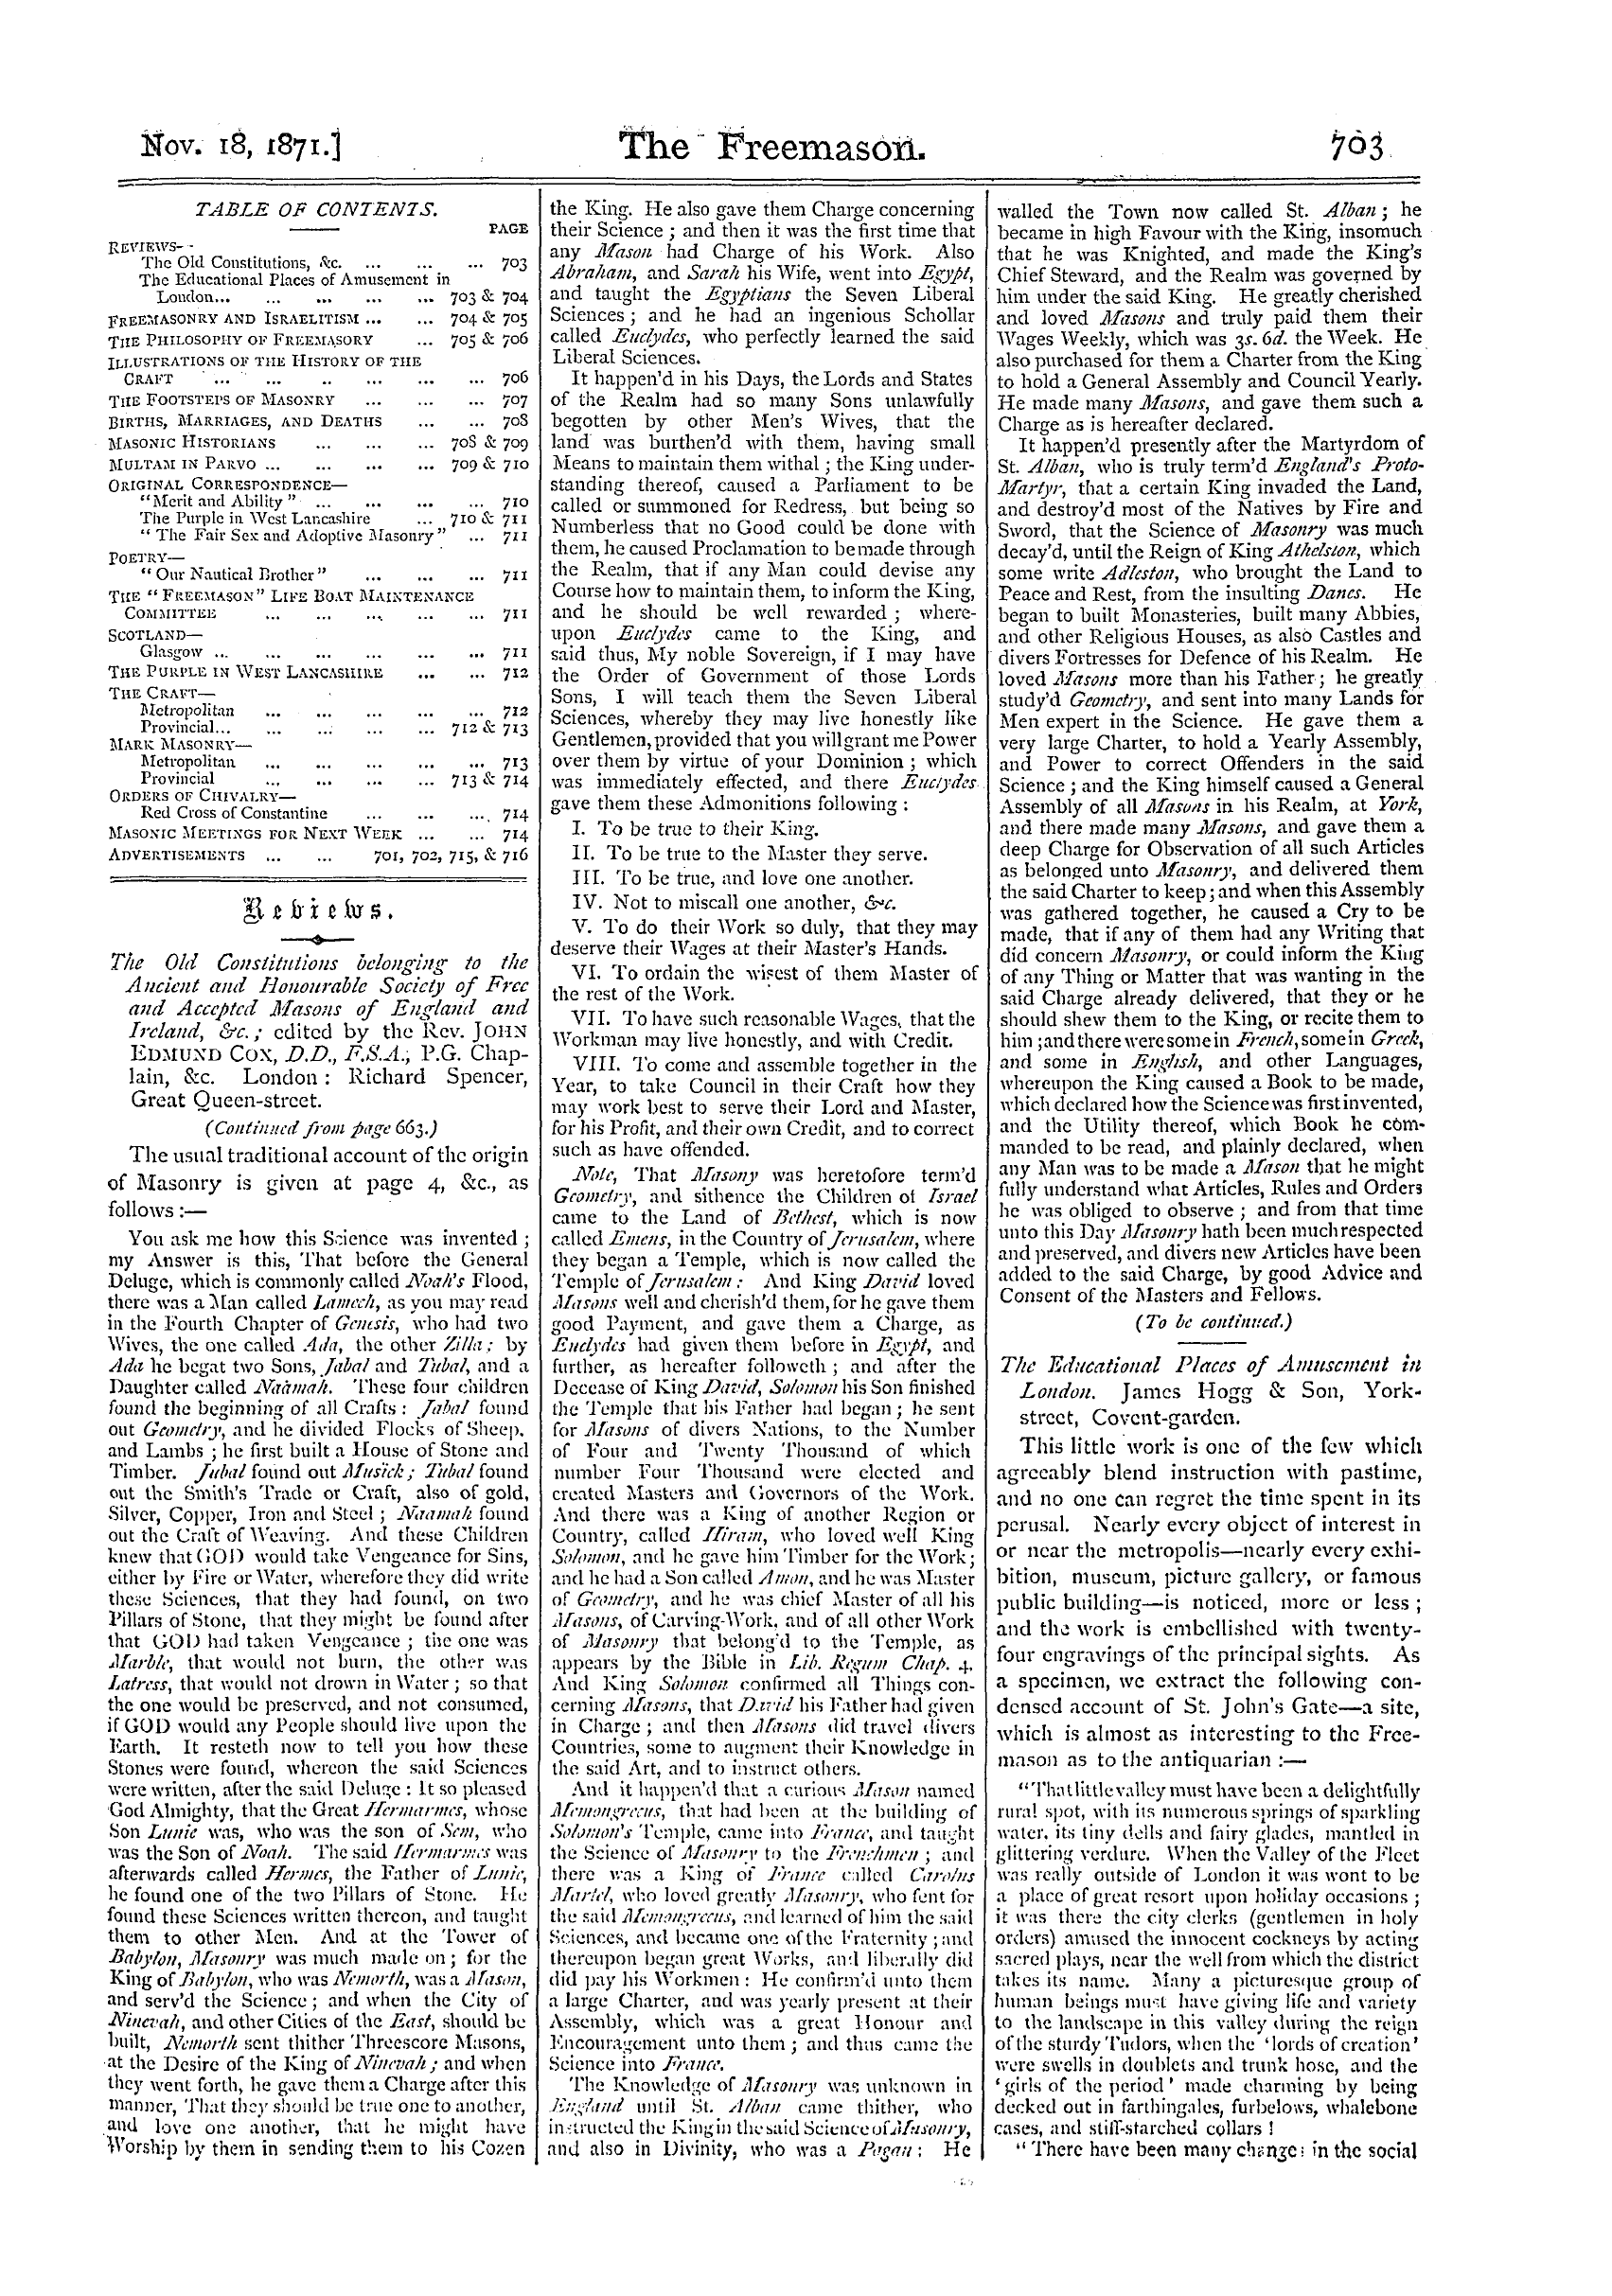 The Freemason: 1871-11-18 - Reviews.